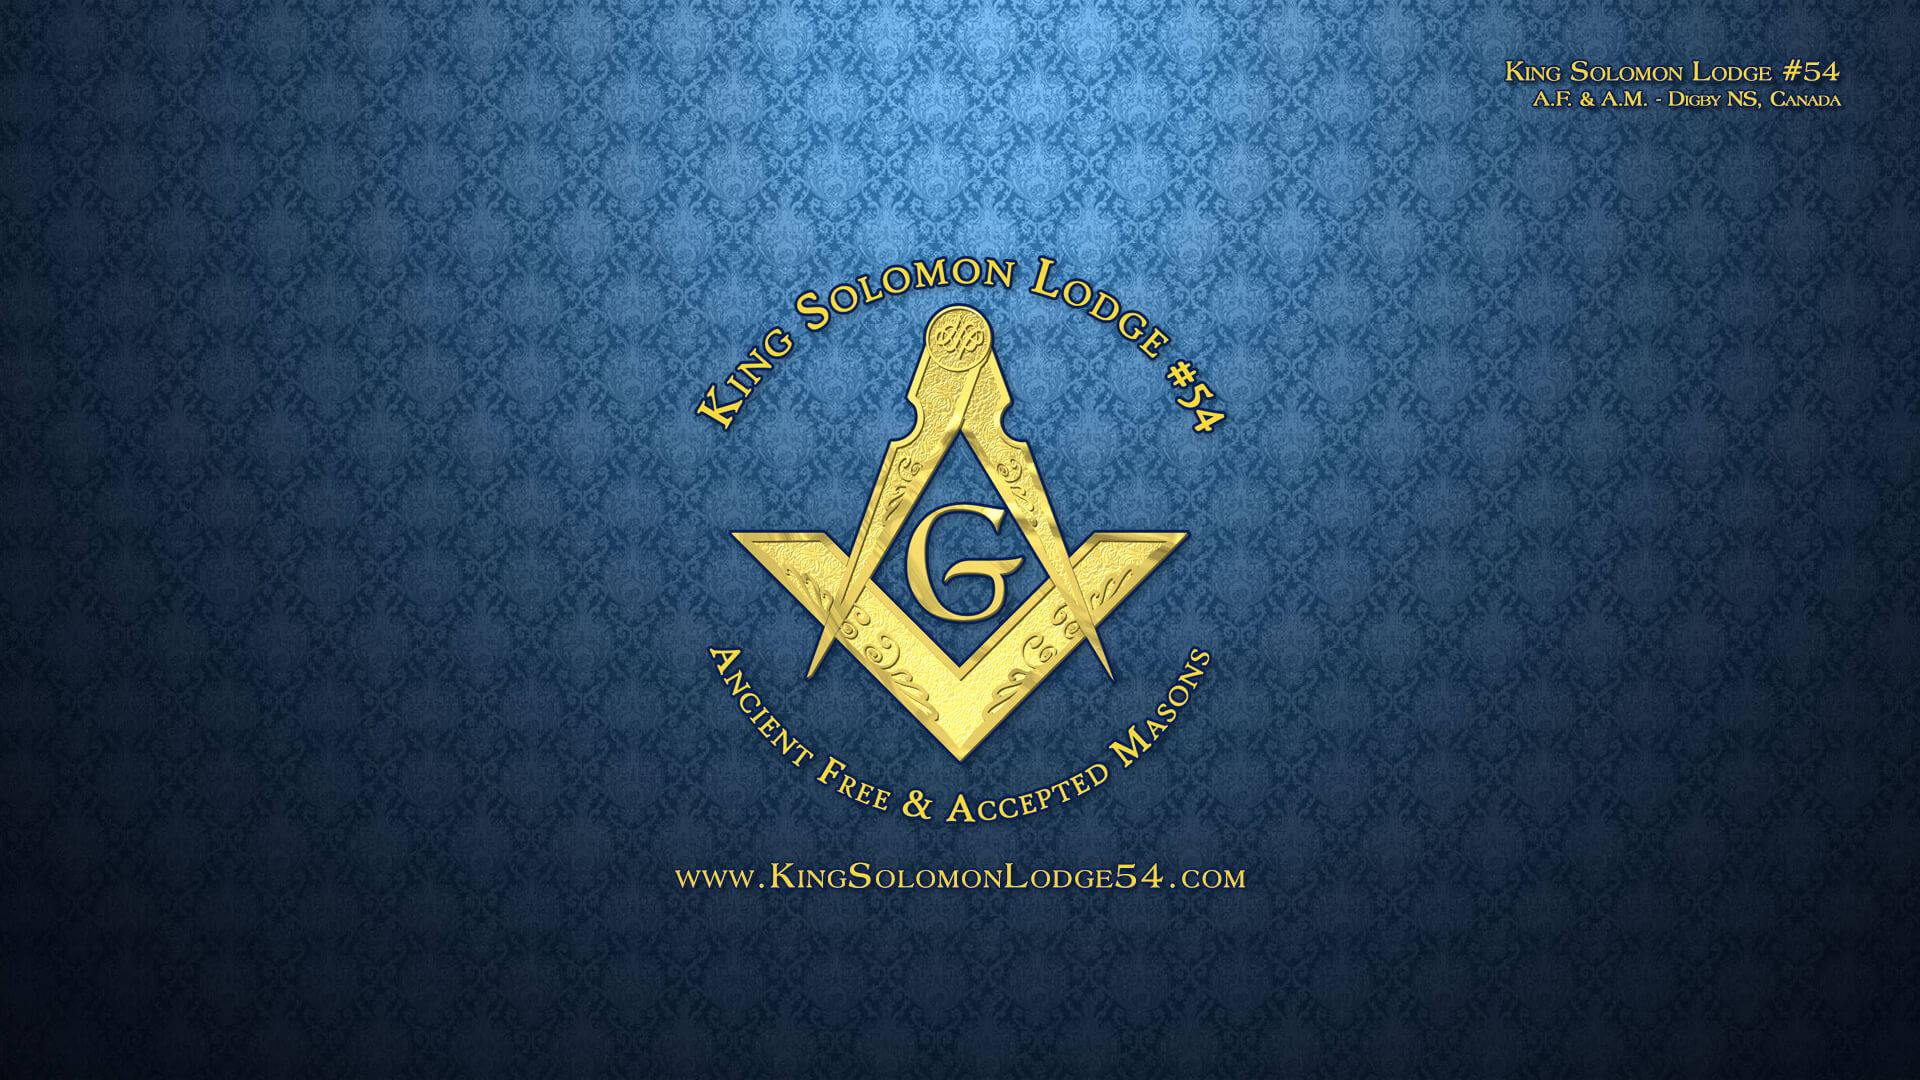 Masonic Logo Of King Solomon Lodge